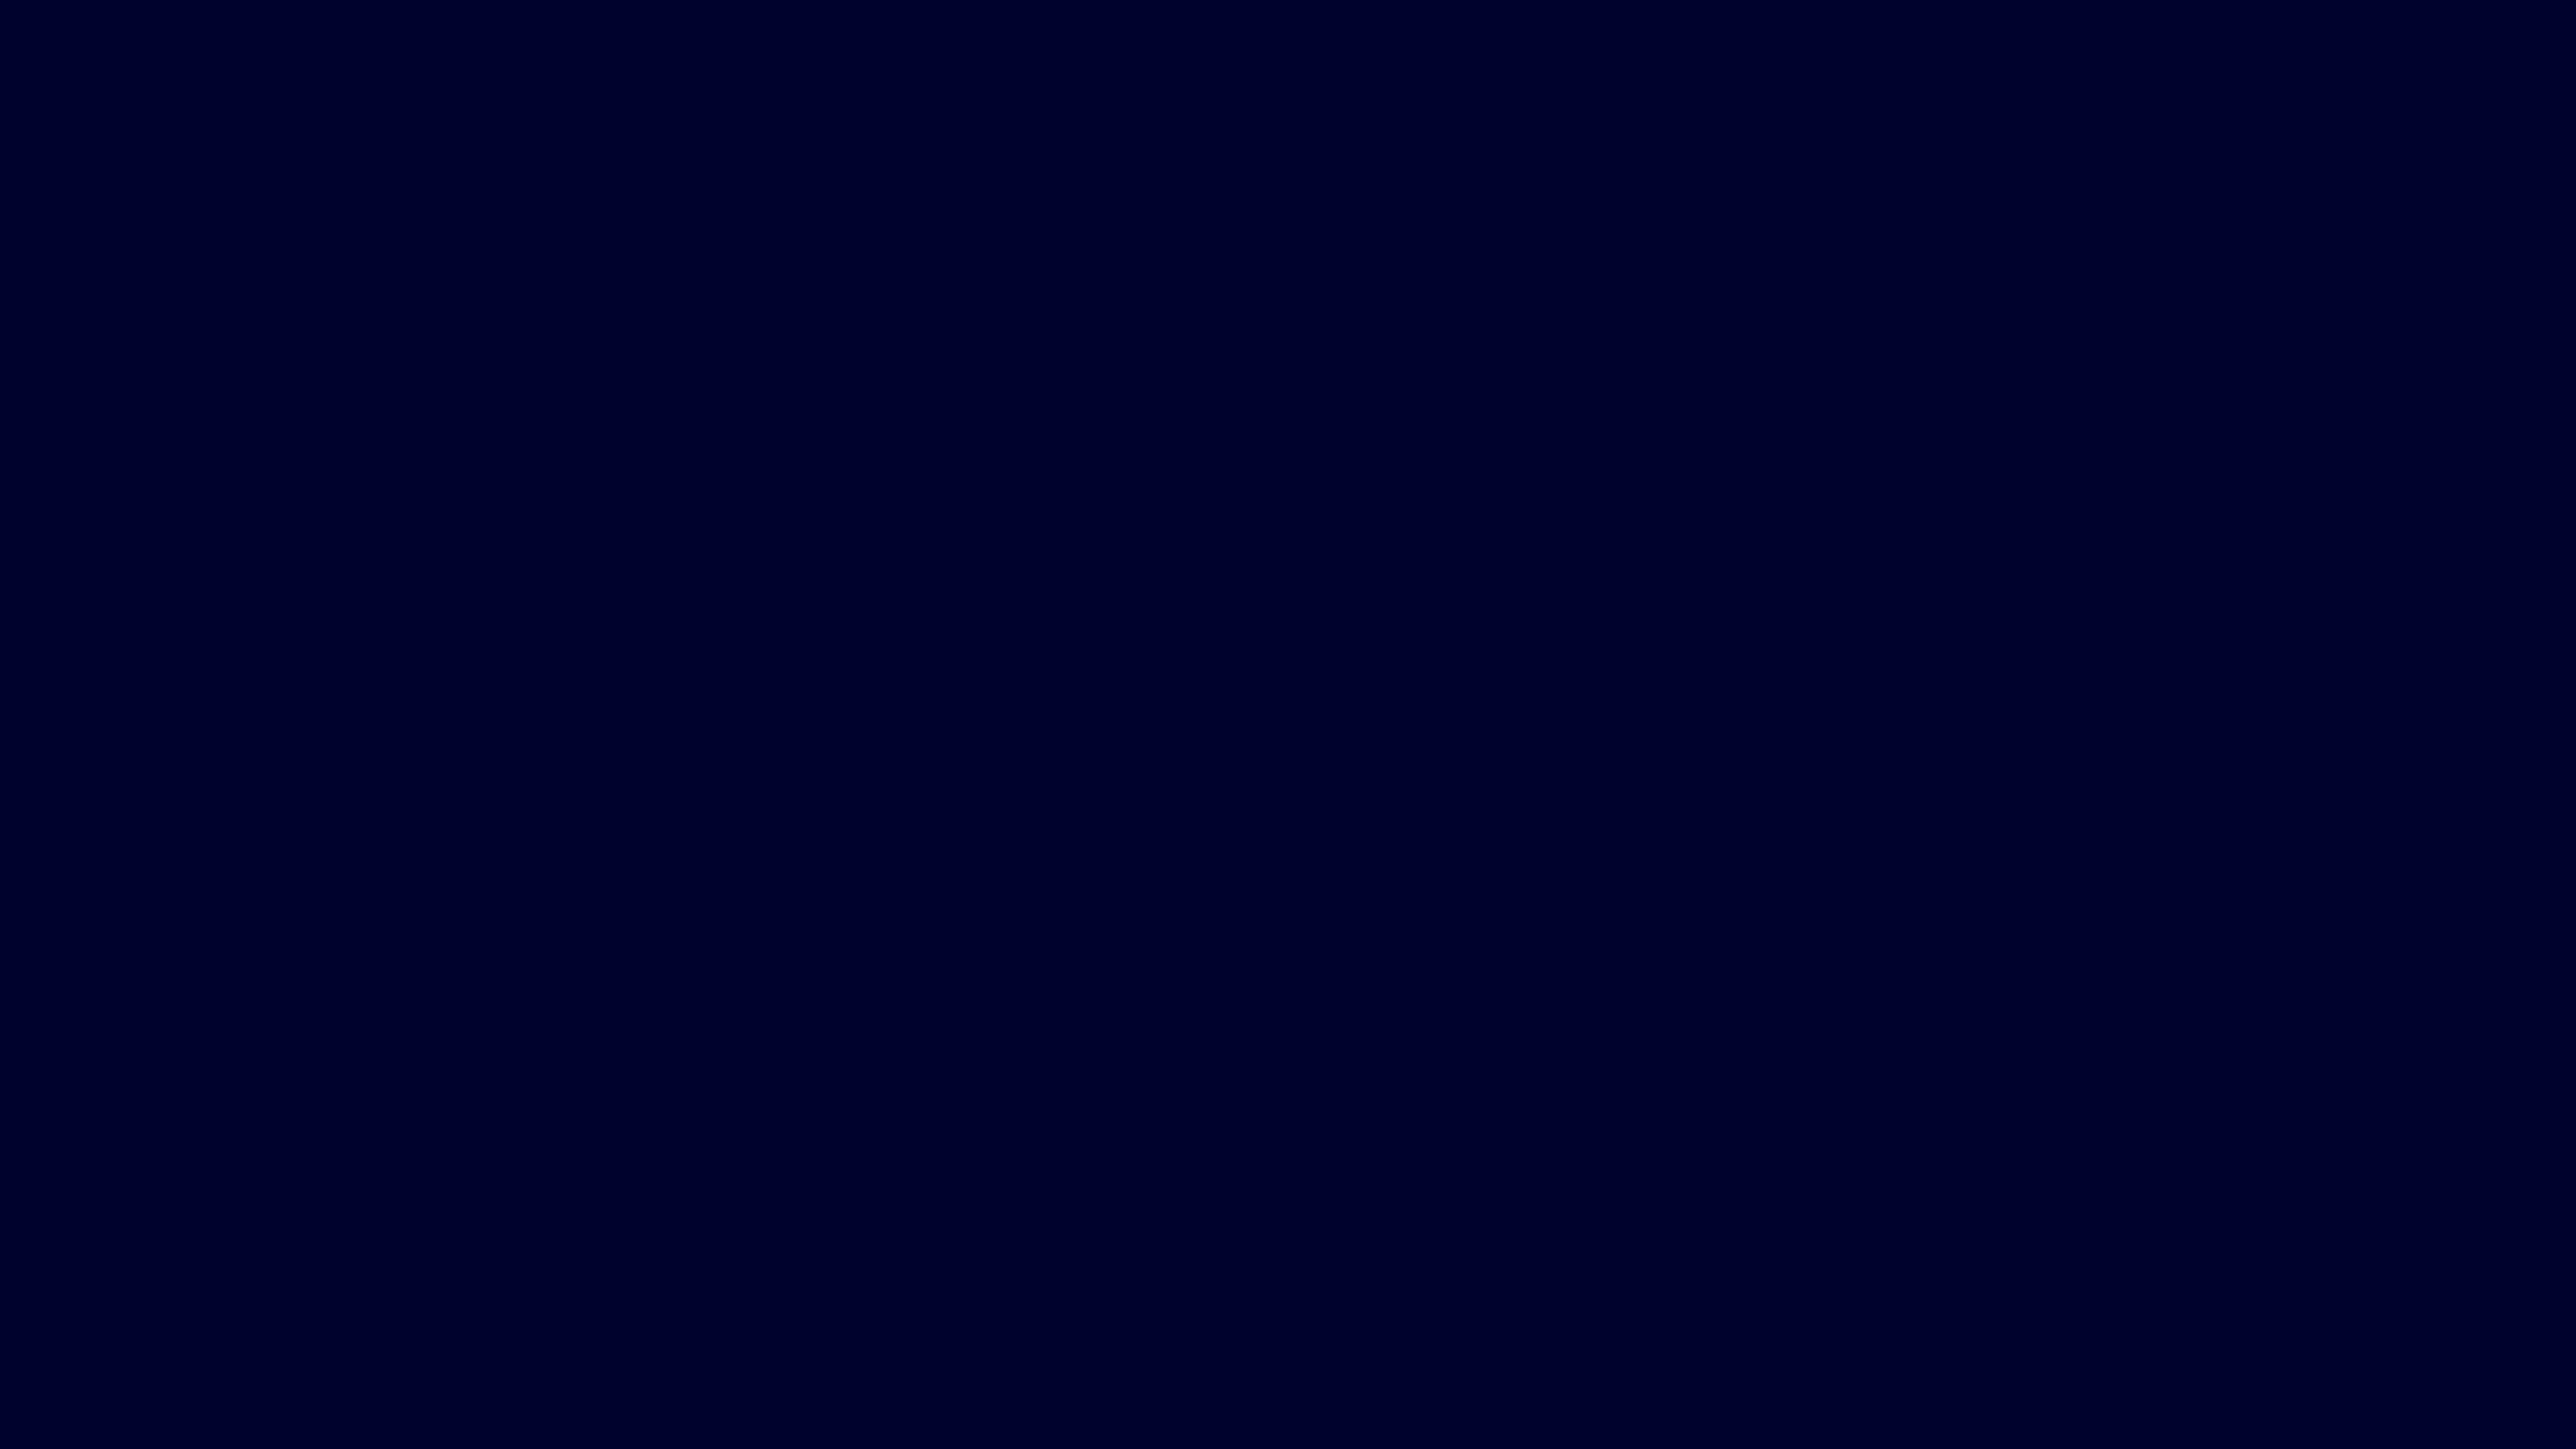 Dark Navy Blue Solid Color Background Image | Free Image Generator